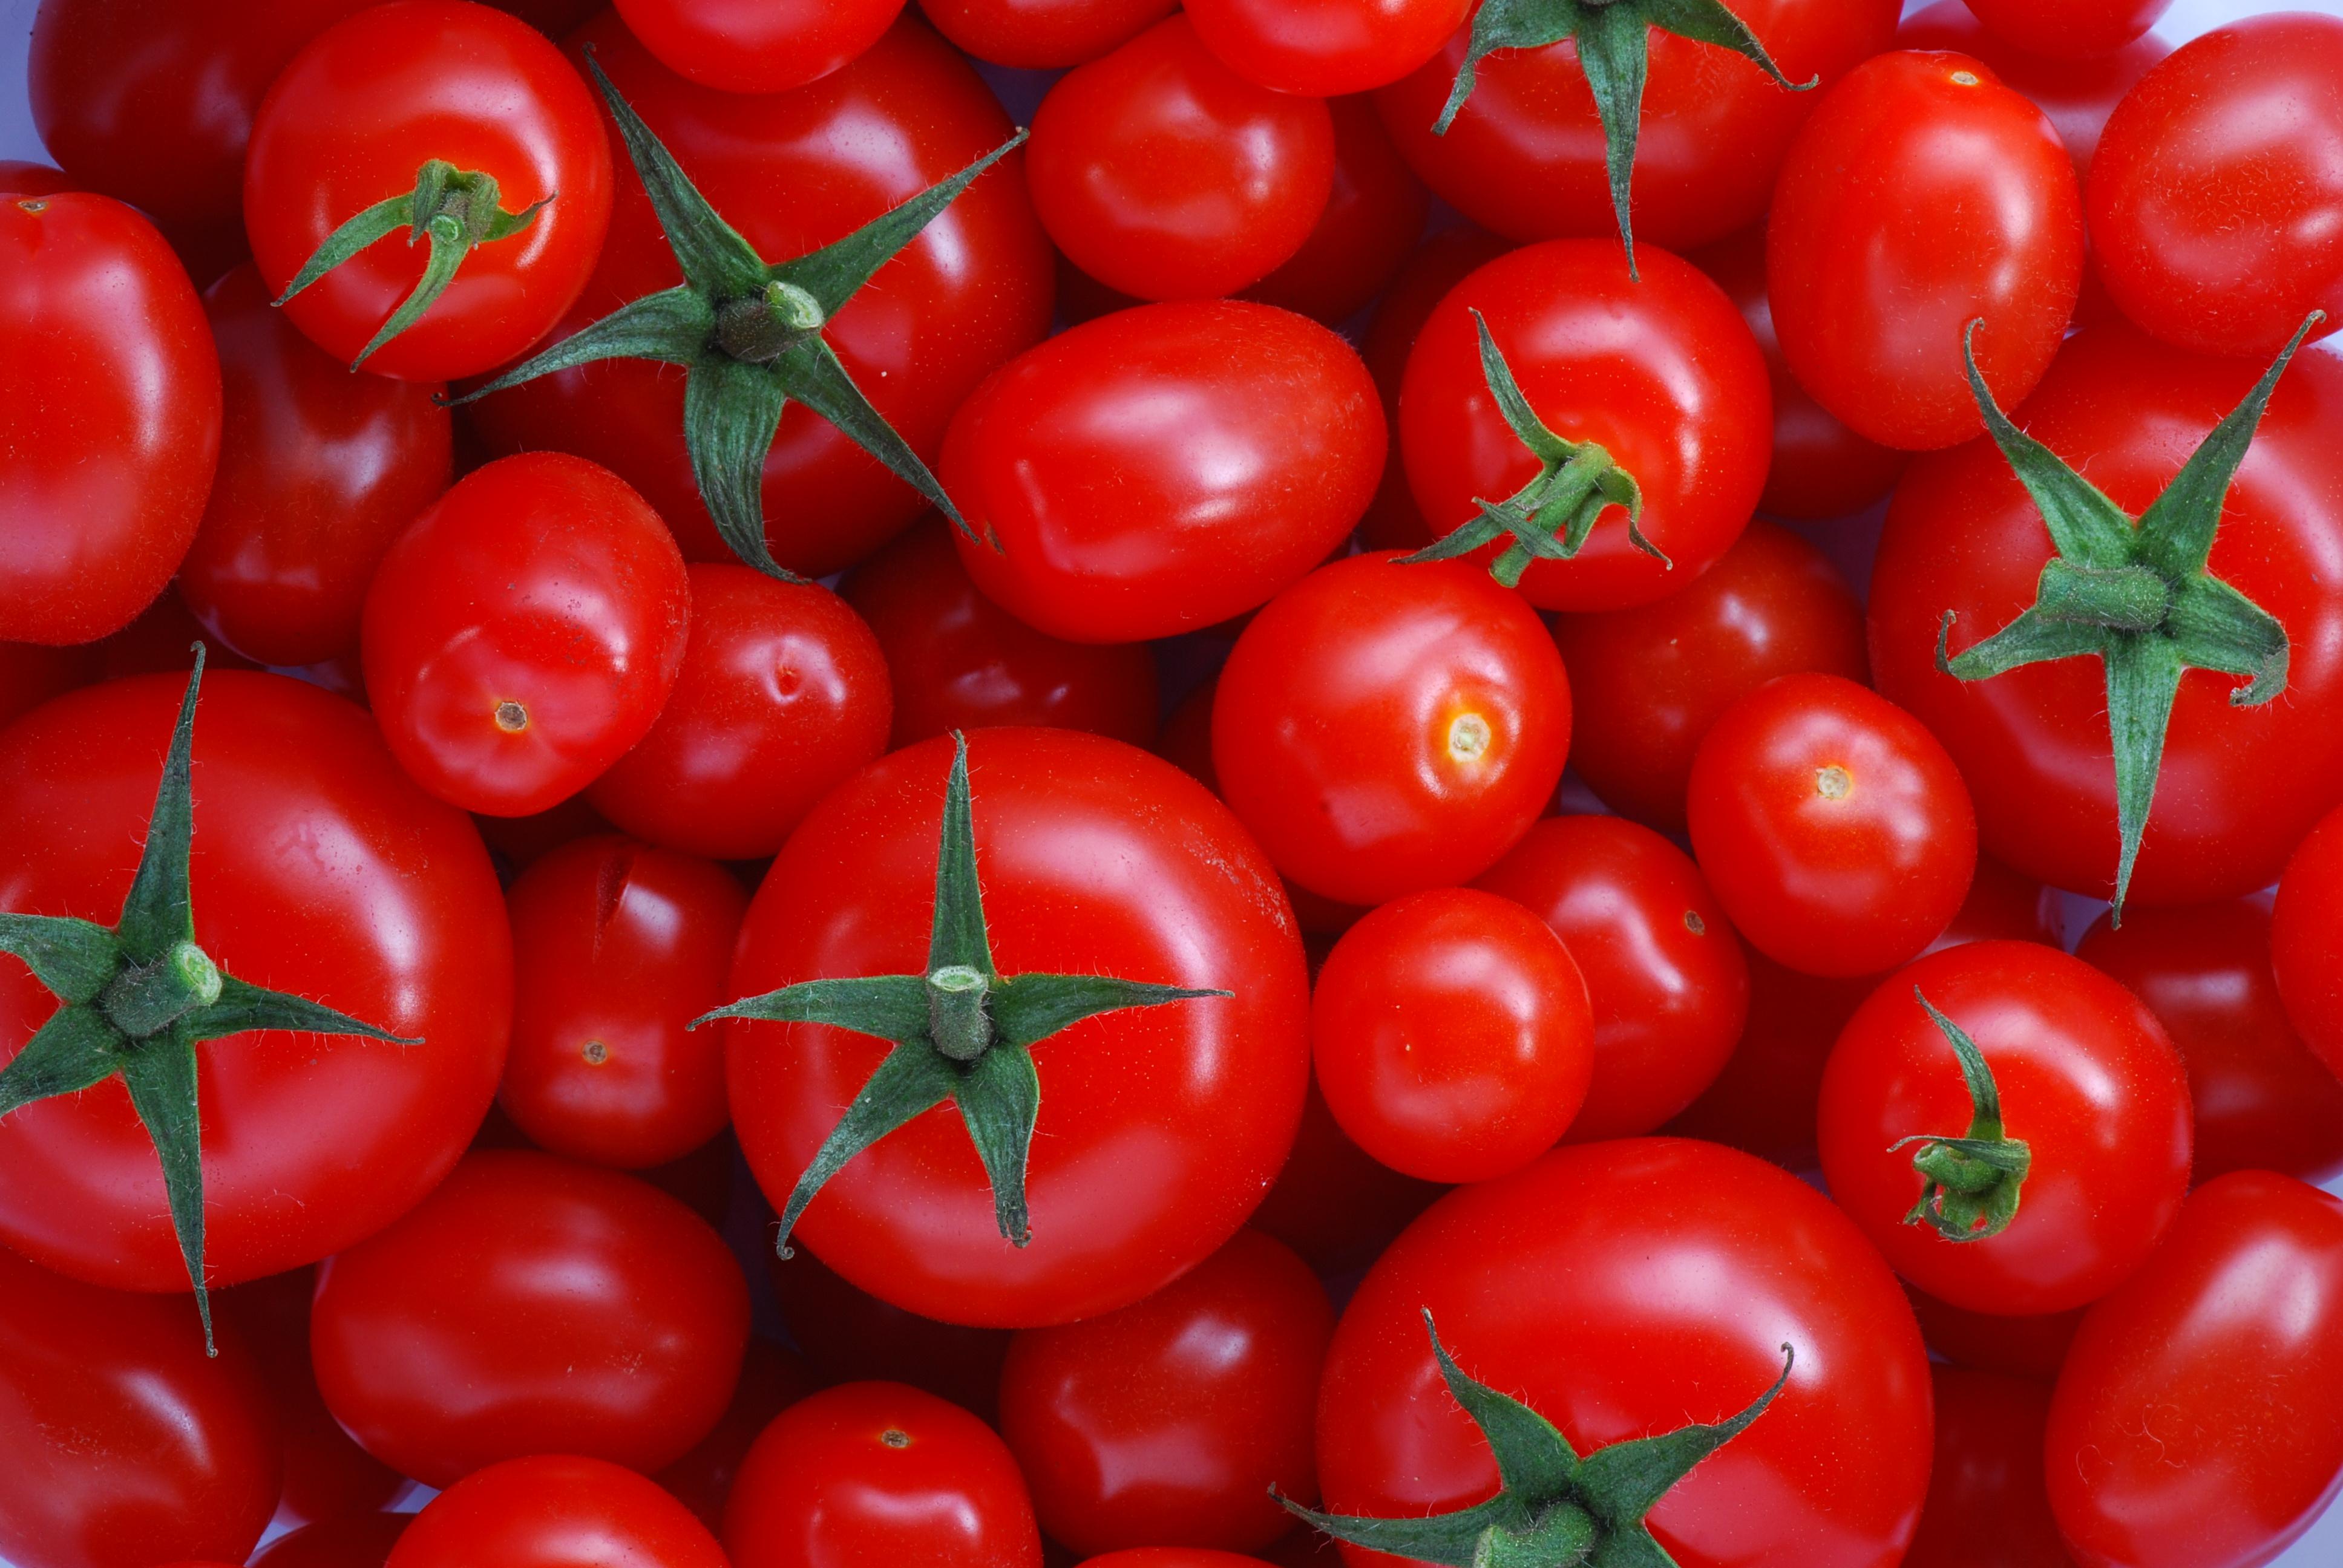 File:Flash-lit macro Tomatoes.jpg - Wikimedia Commons